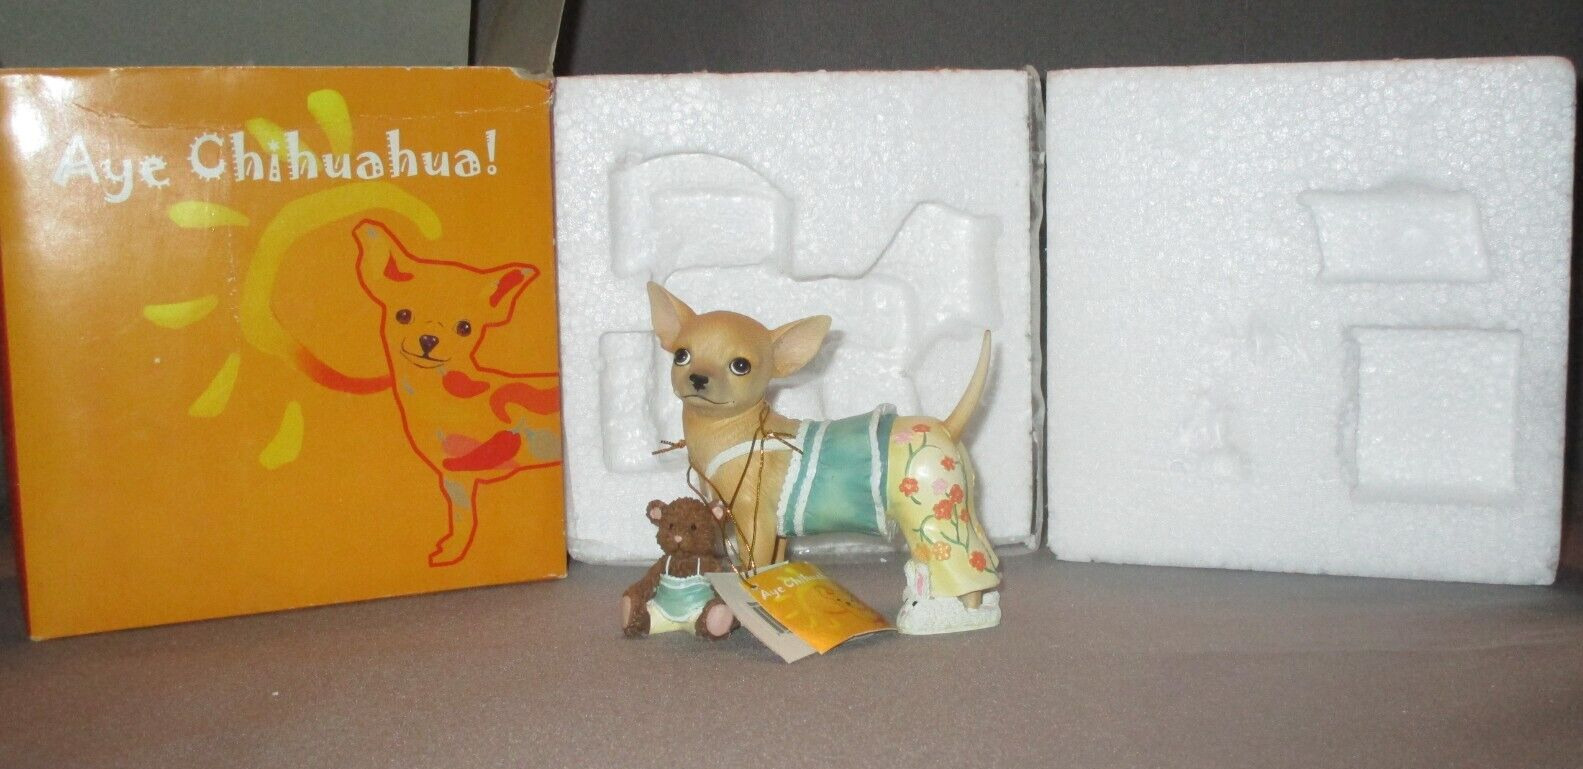 2008 Westland Giftware Aye Chihuahua Dog Figurine 13346 Pajamas Teddy Bear NIB